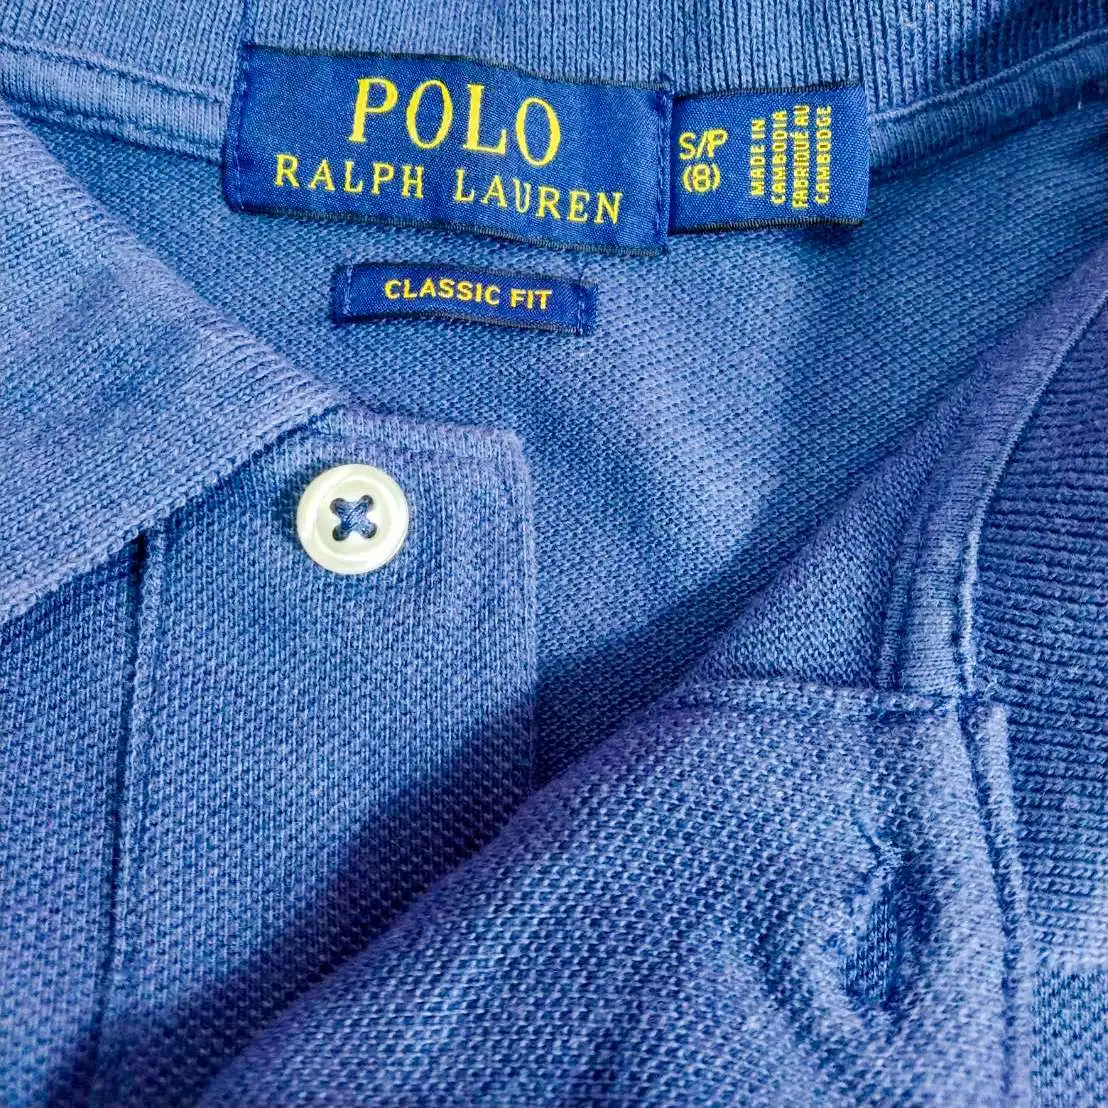 POLO RALPH LAUREN เสื้อโปโลแขนสั้นสีกรมไซส์ S/P,8 